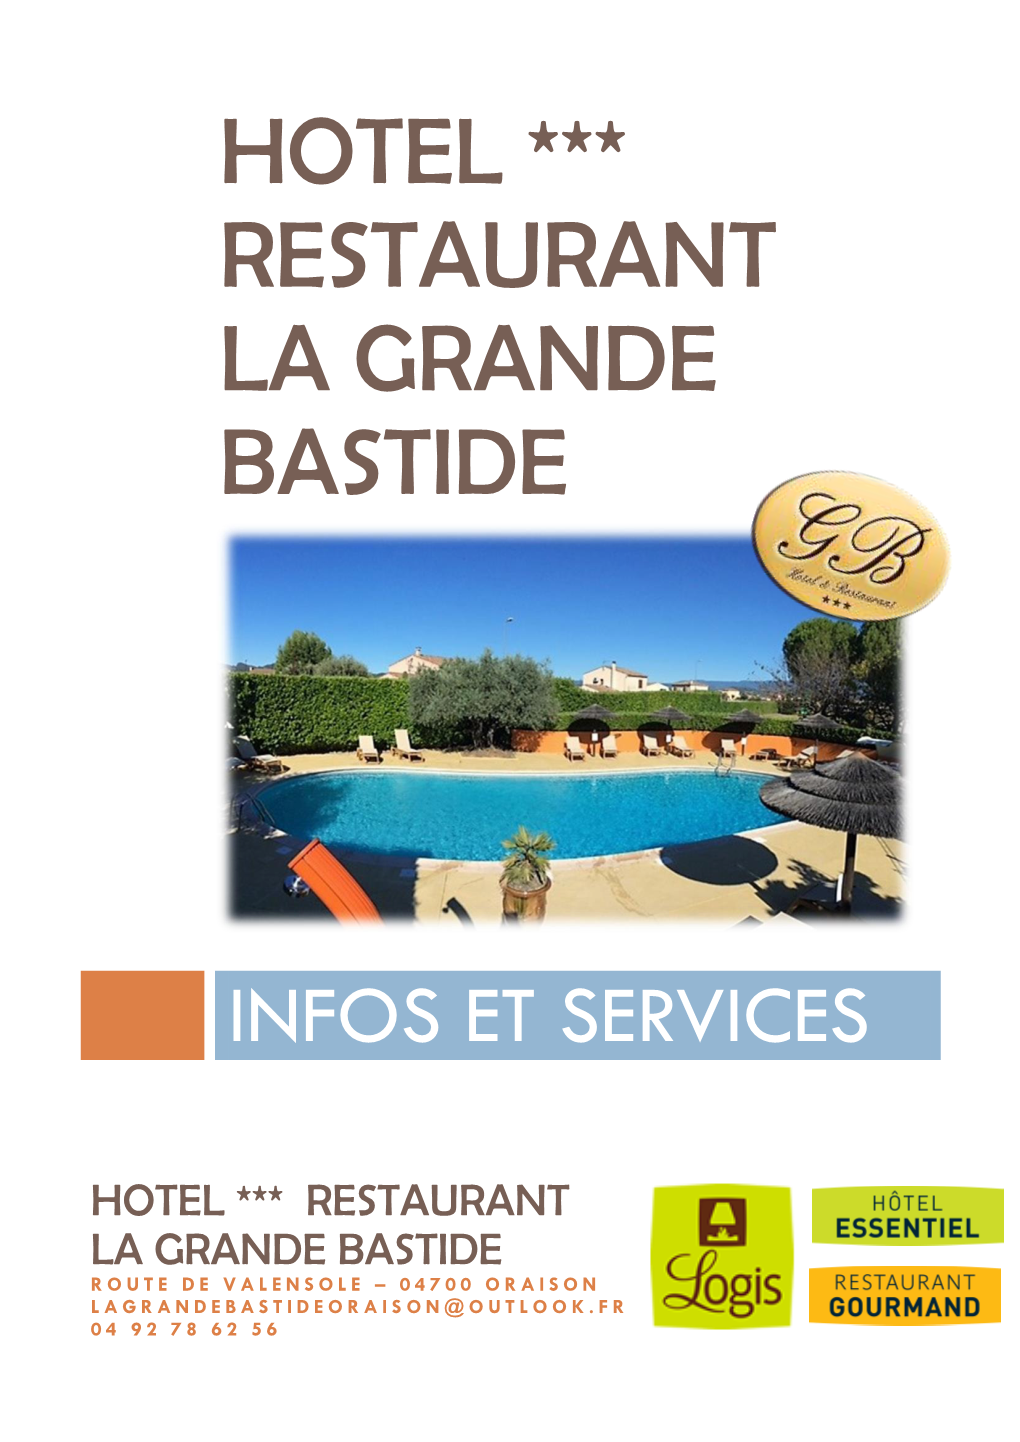 Hotel *** Restaurant La Grande Bastide